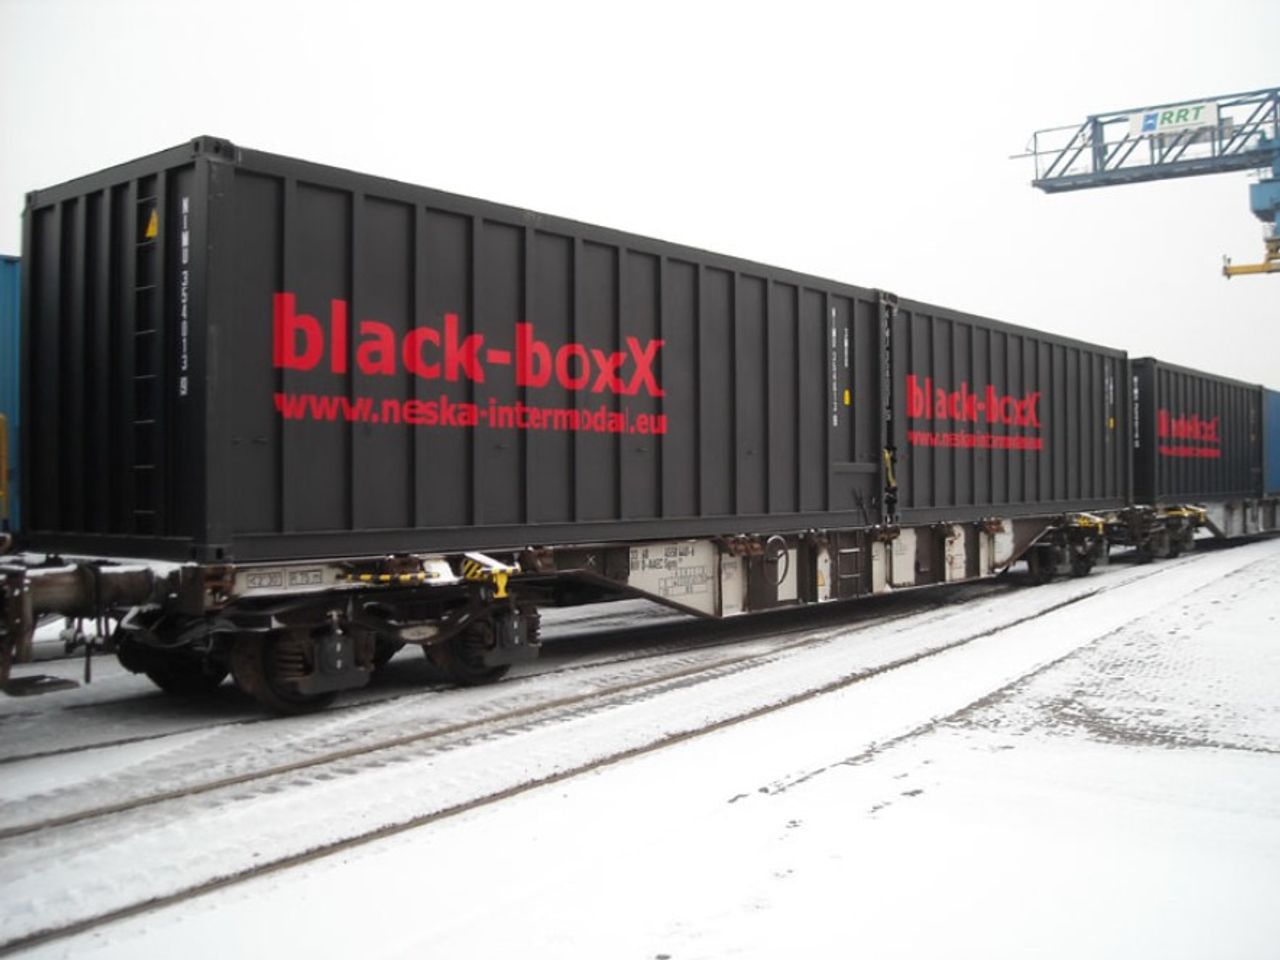 Transport in Blackboxx